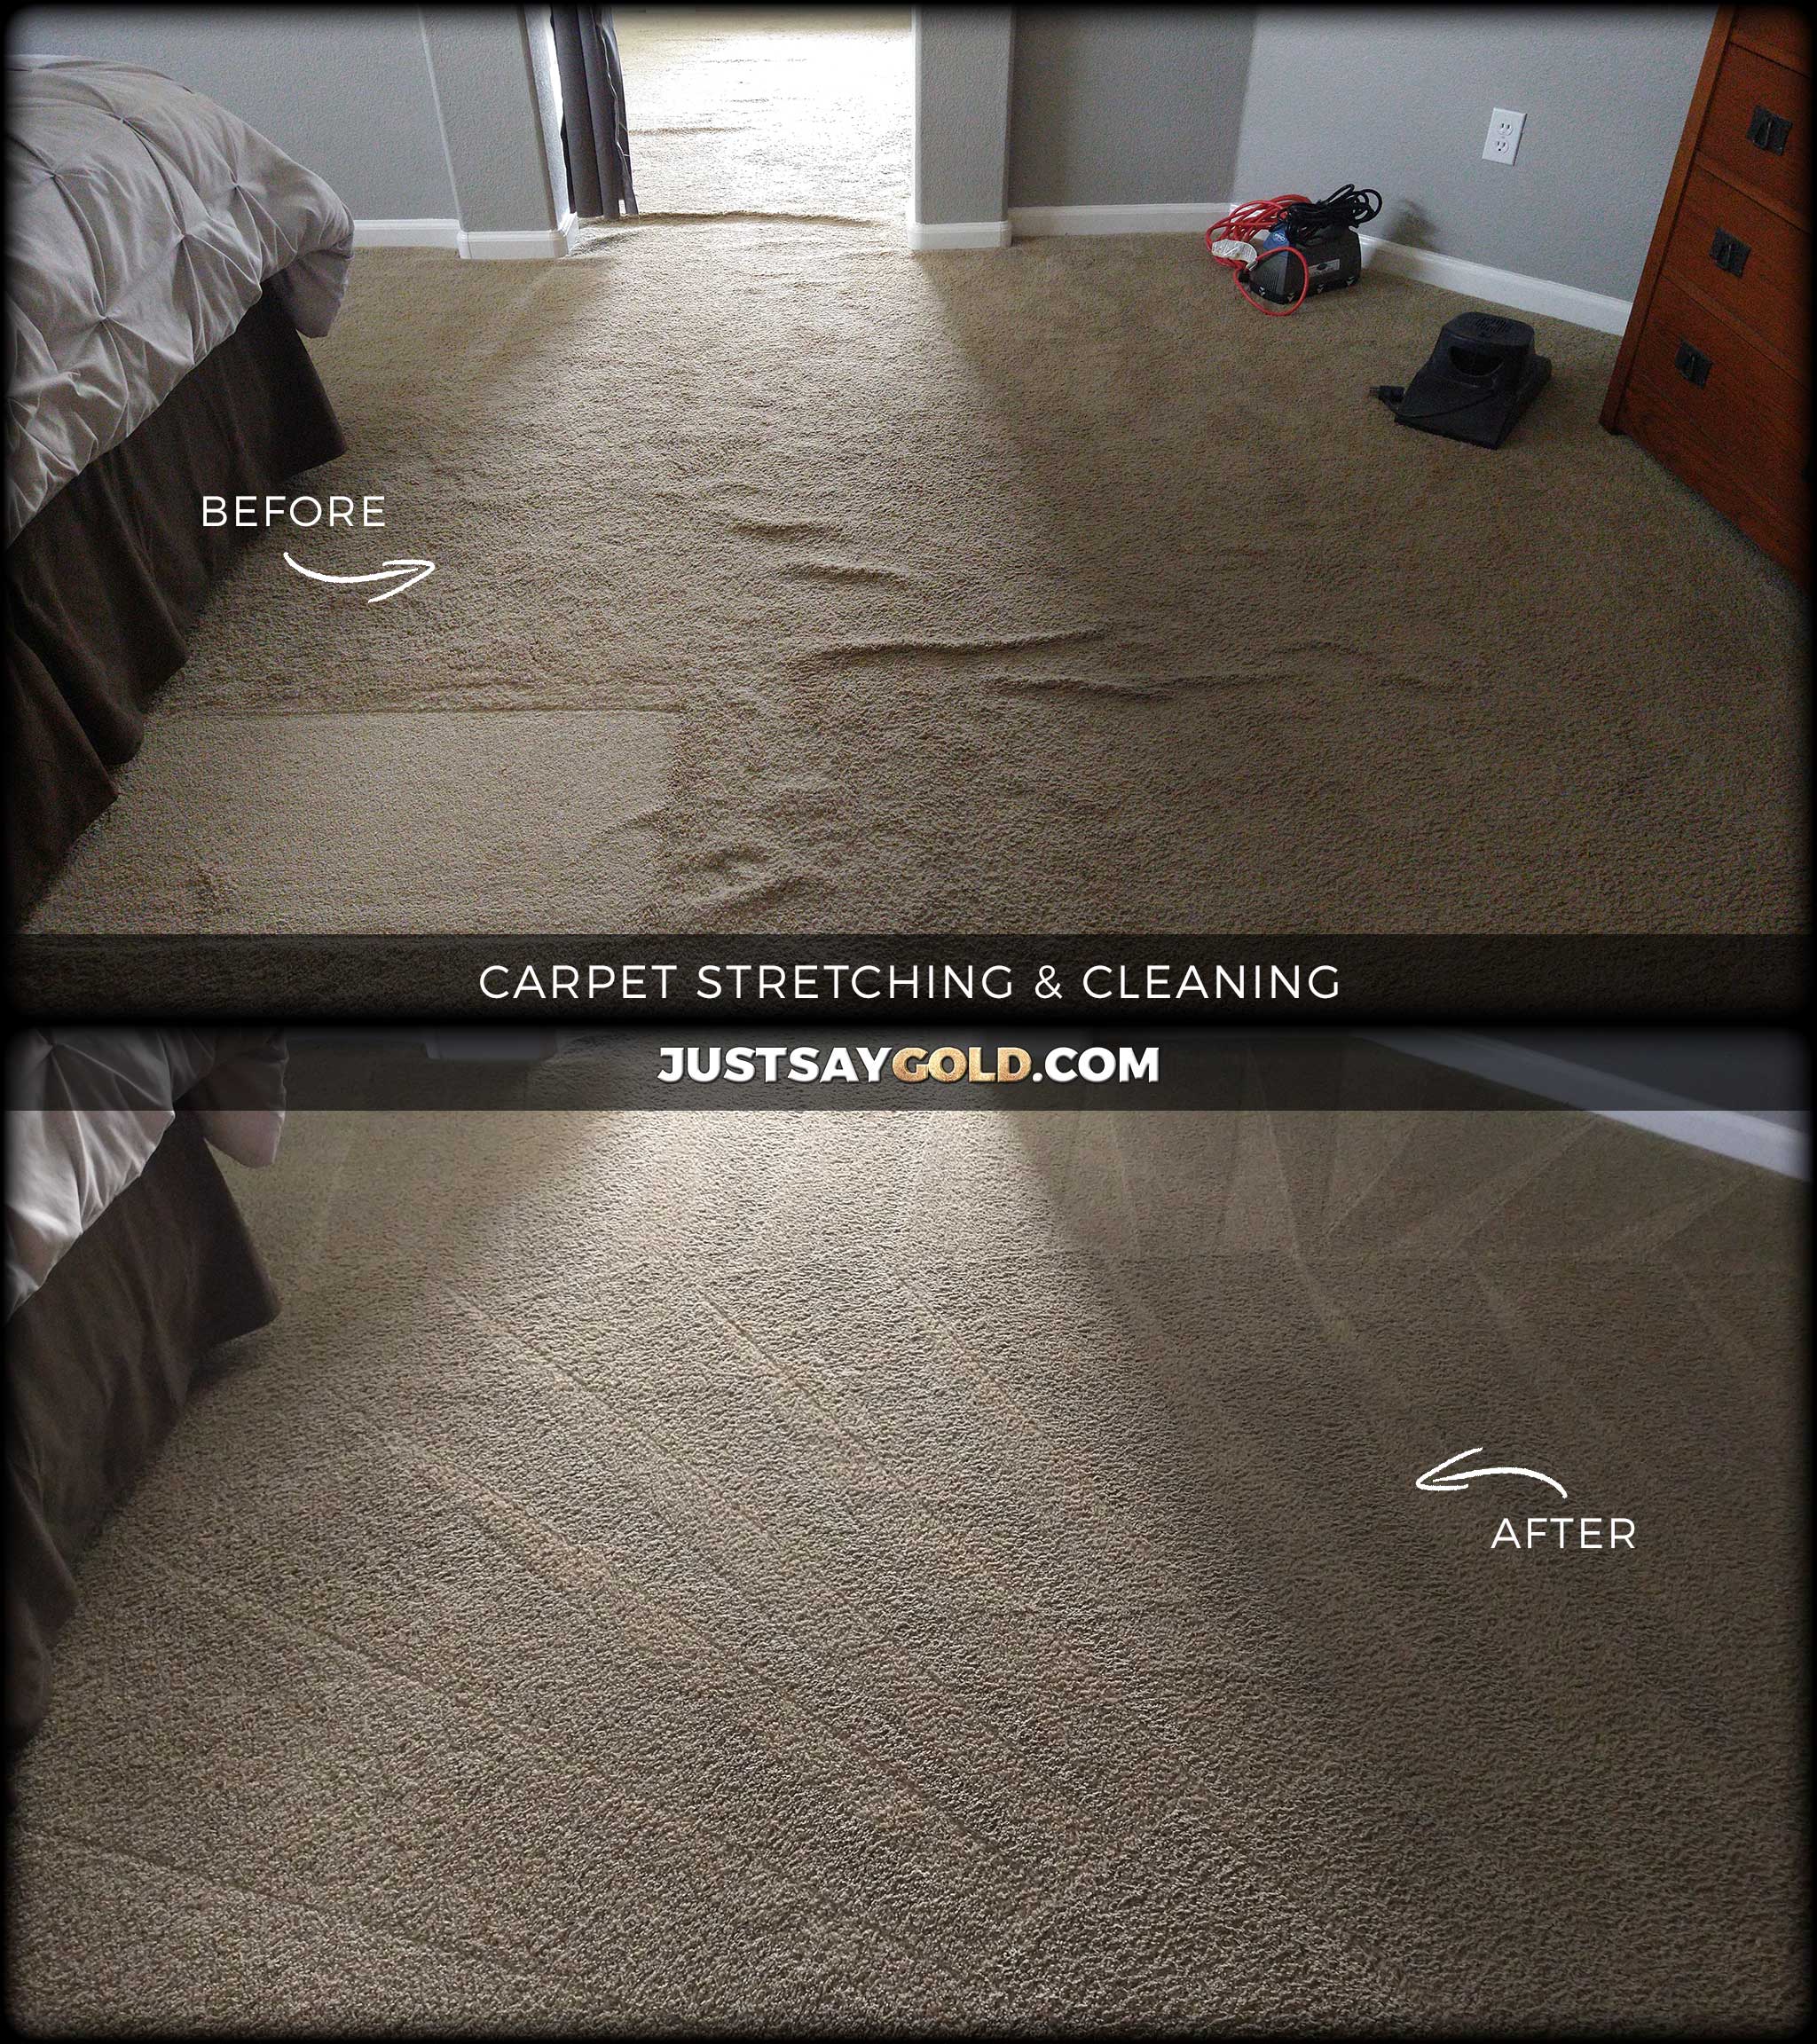 The Best Carpet Repair & Re-Stretching In Rocklin